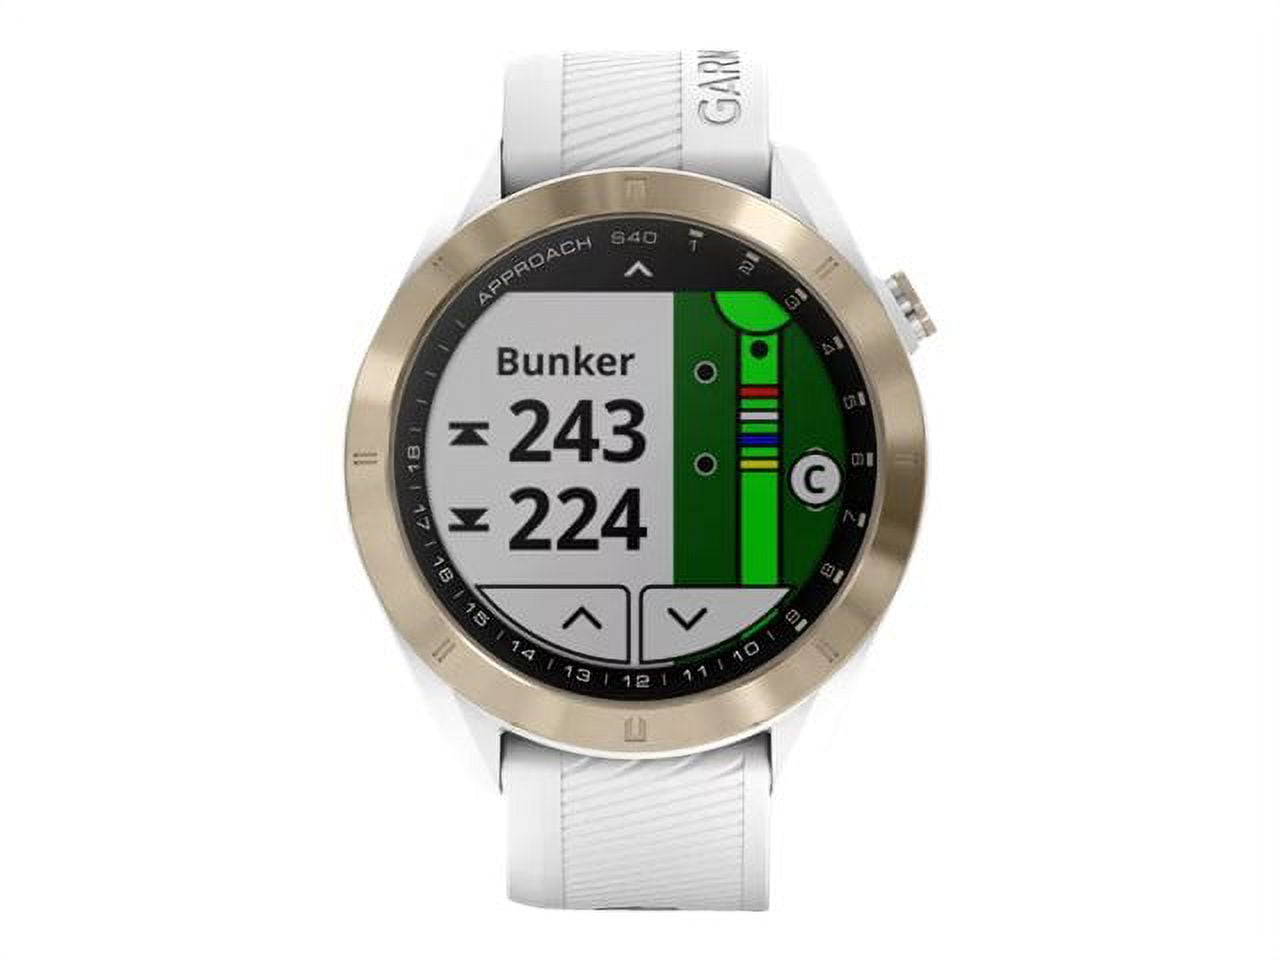 Garmin Approach S40 GPS Golf Smartwatch in Black - Walmart.com